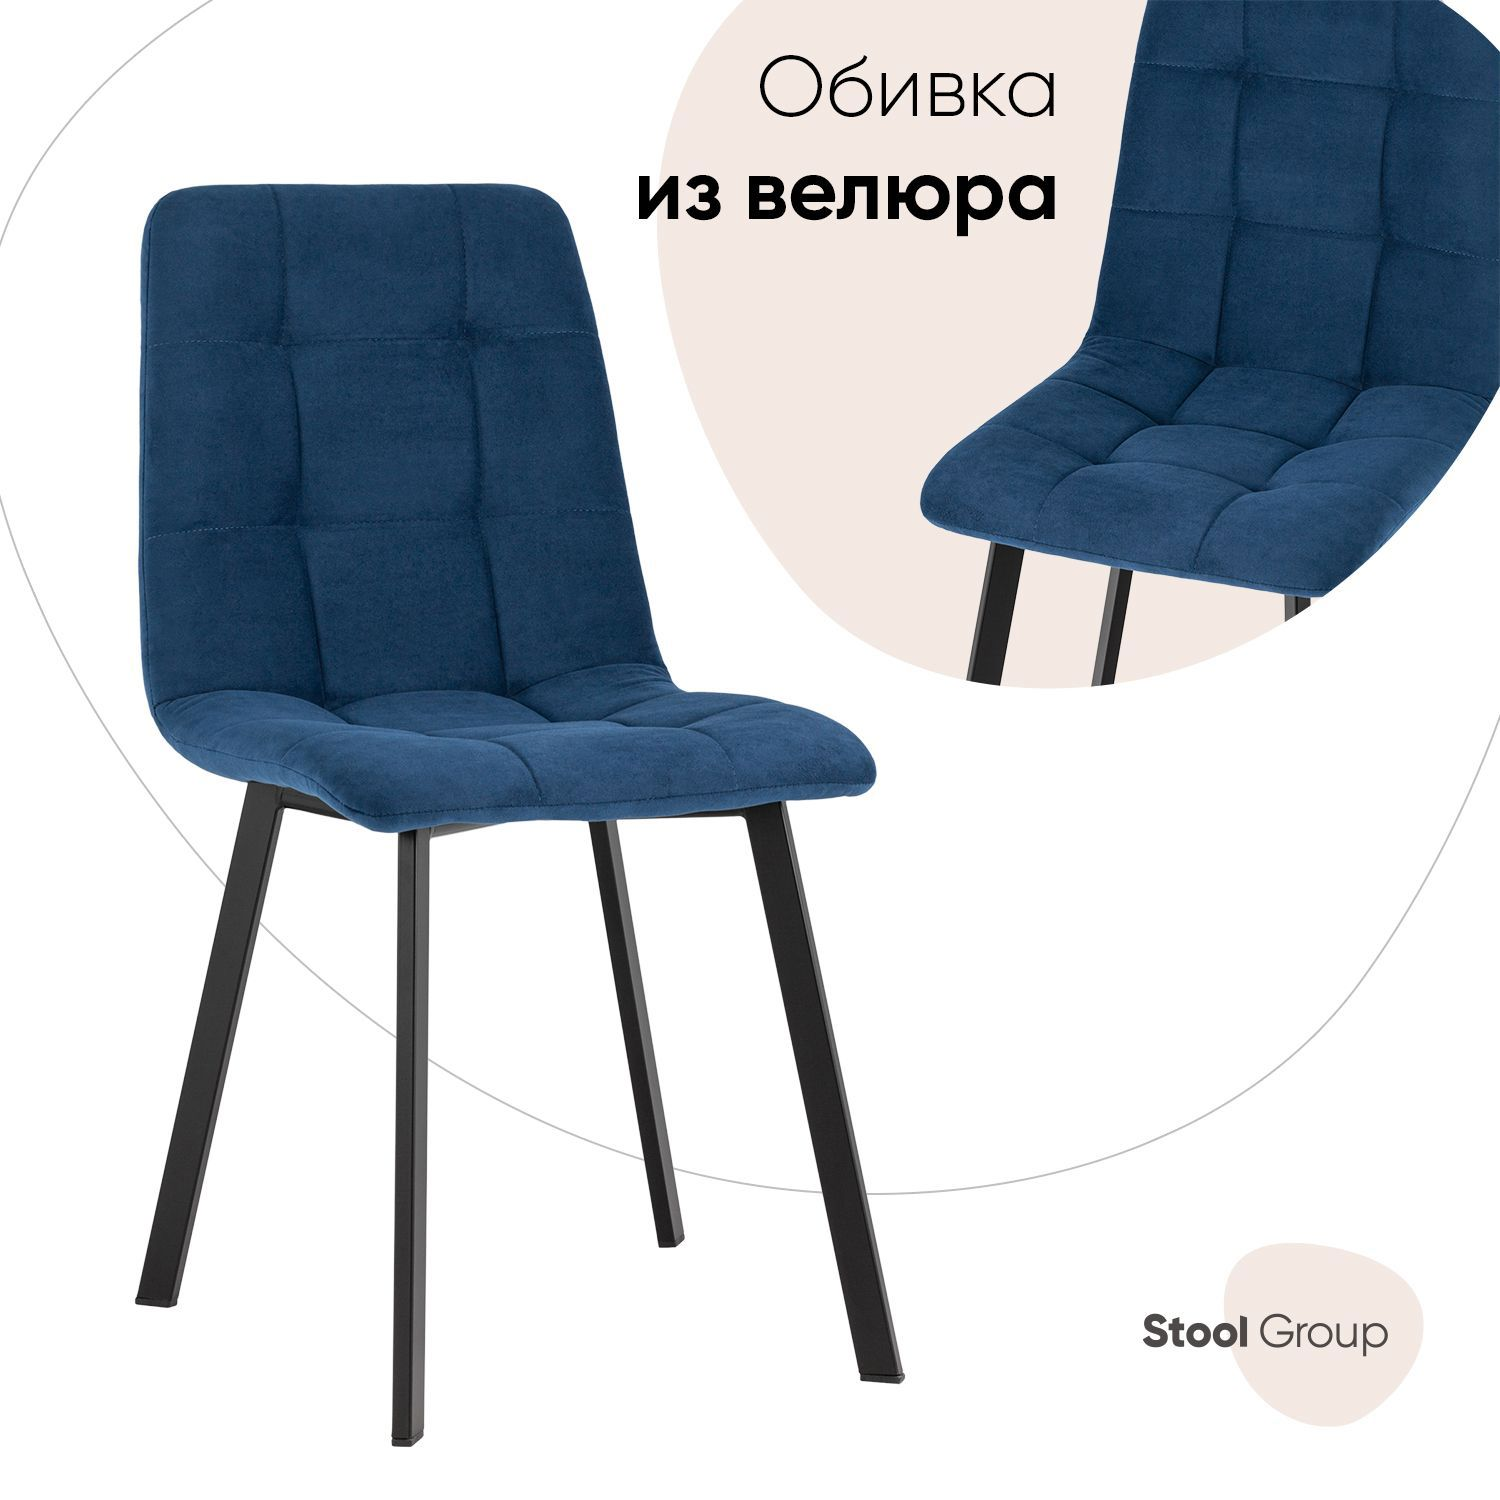 90403203 Кухонный стул 89х53х44 см велюр цвет синий fb--square-neo-27 Oliver STLM-0215908 ФАБРИКАНТ